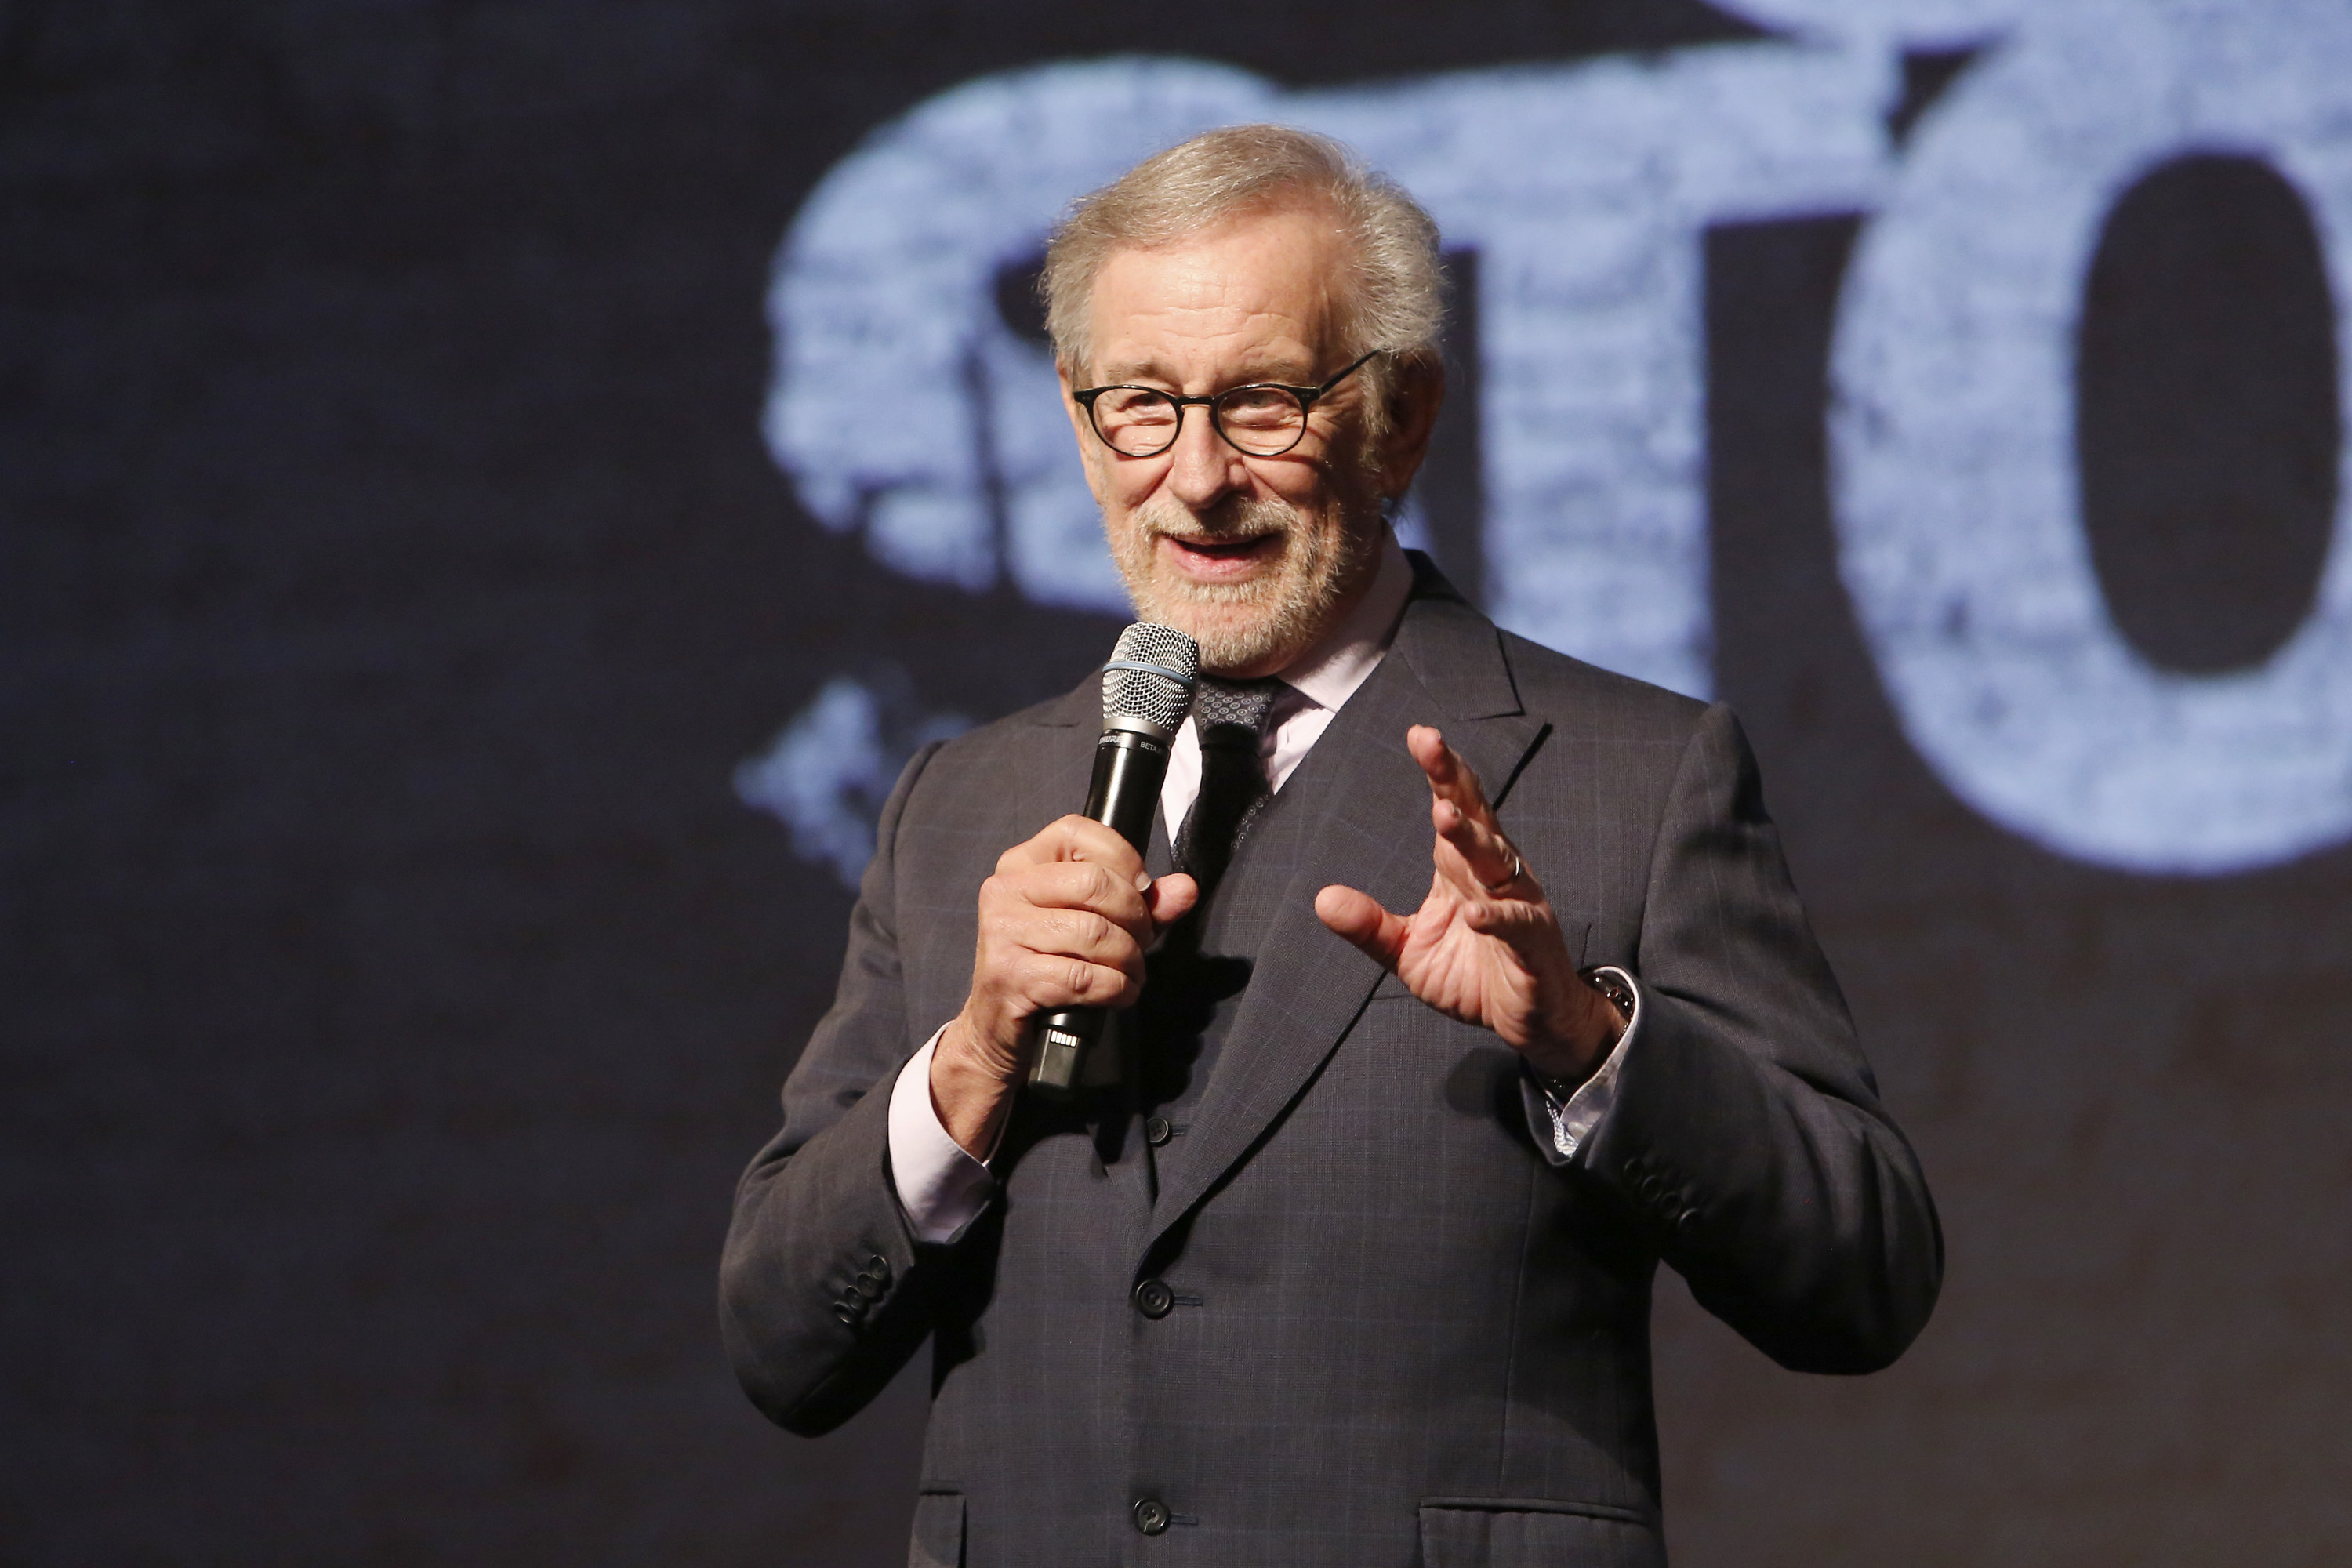 Steven Spielberg speaking onstage at the Los Angeles premiere of West Side Story